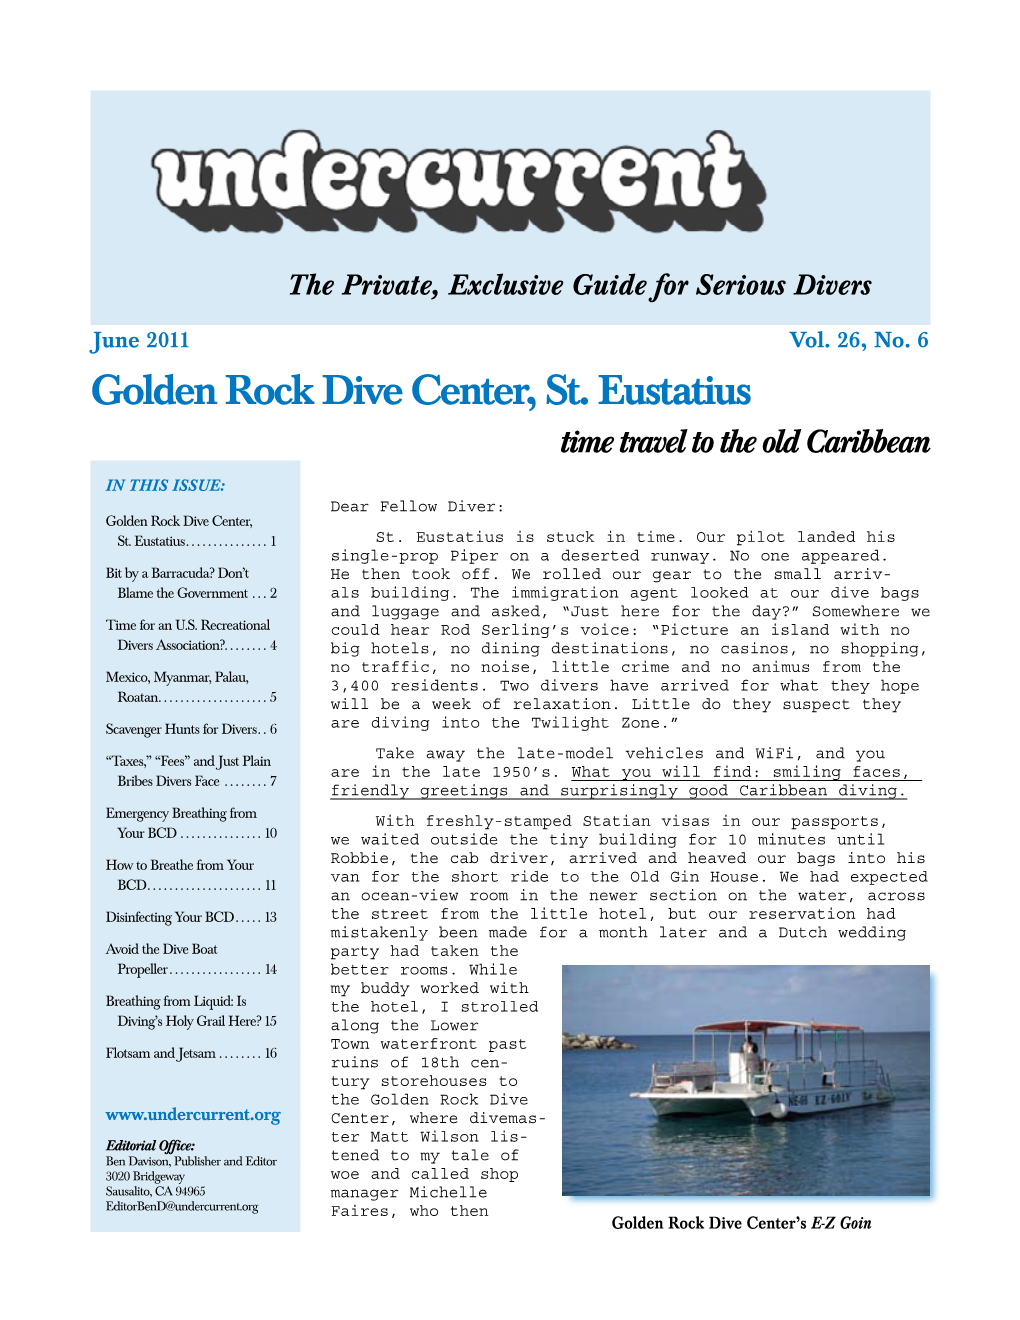 Golden Rock Dive Center, St. Eustatius + [Other Articles